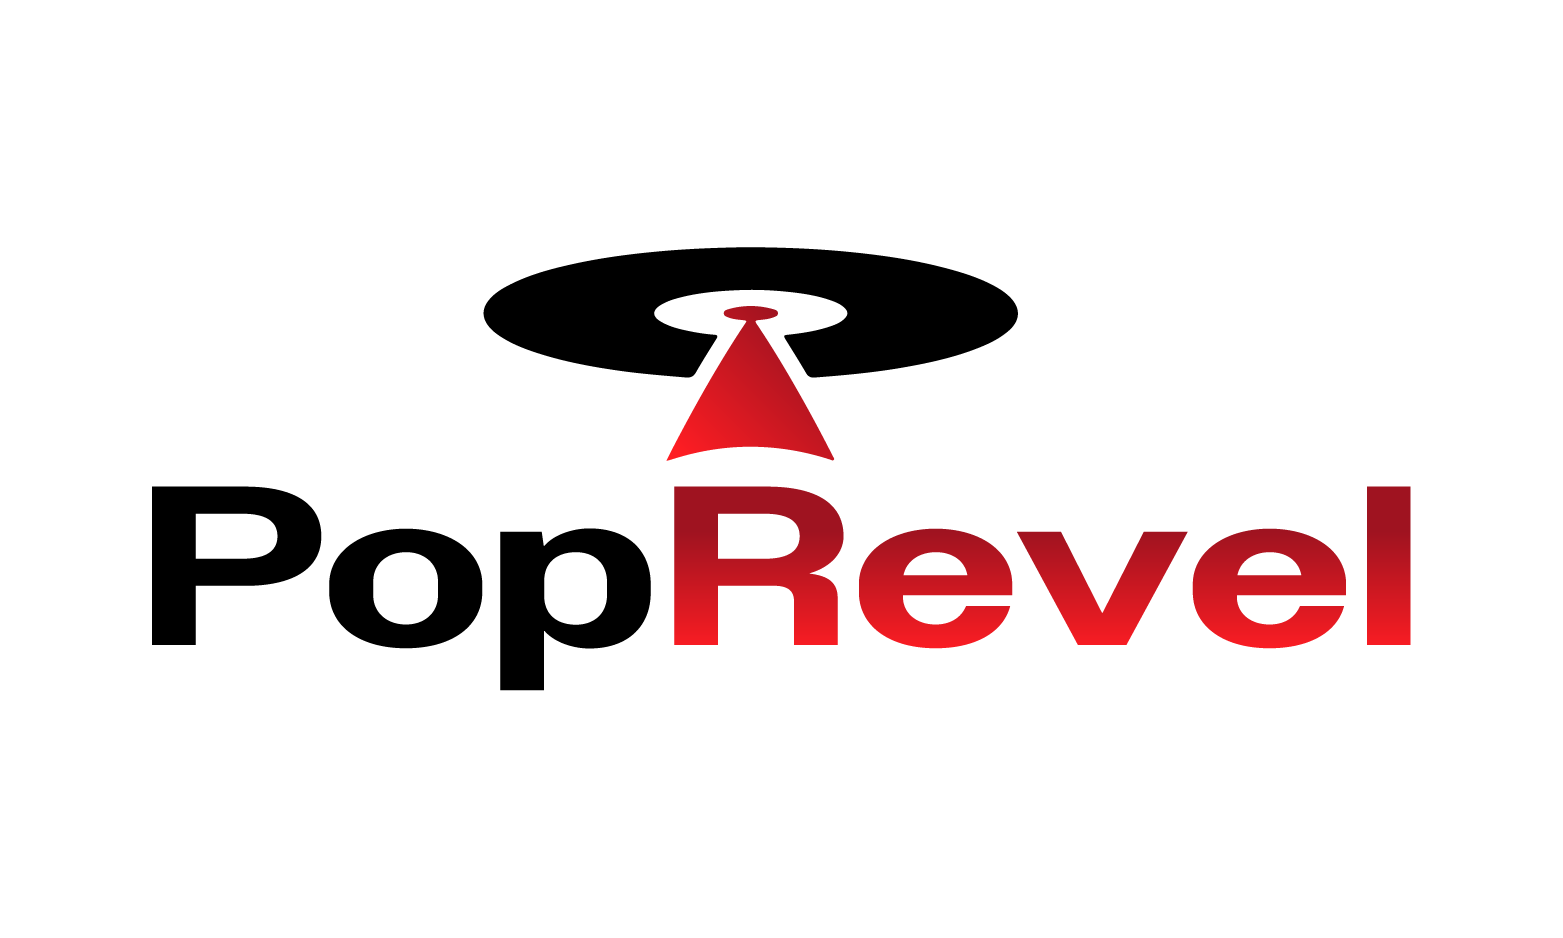 PopRevel.com - Creative brandable domain for sale